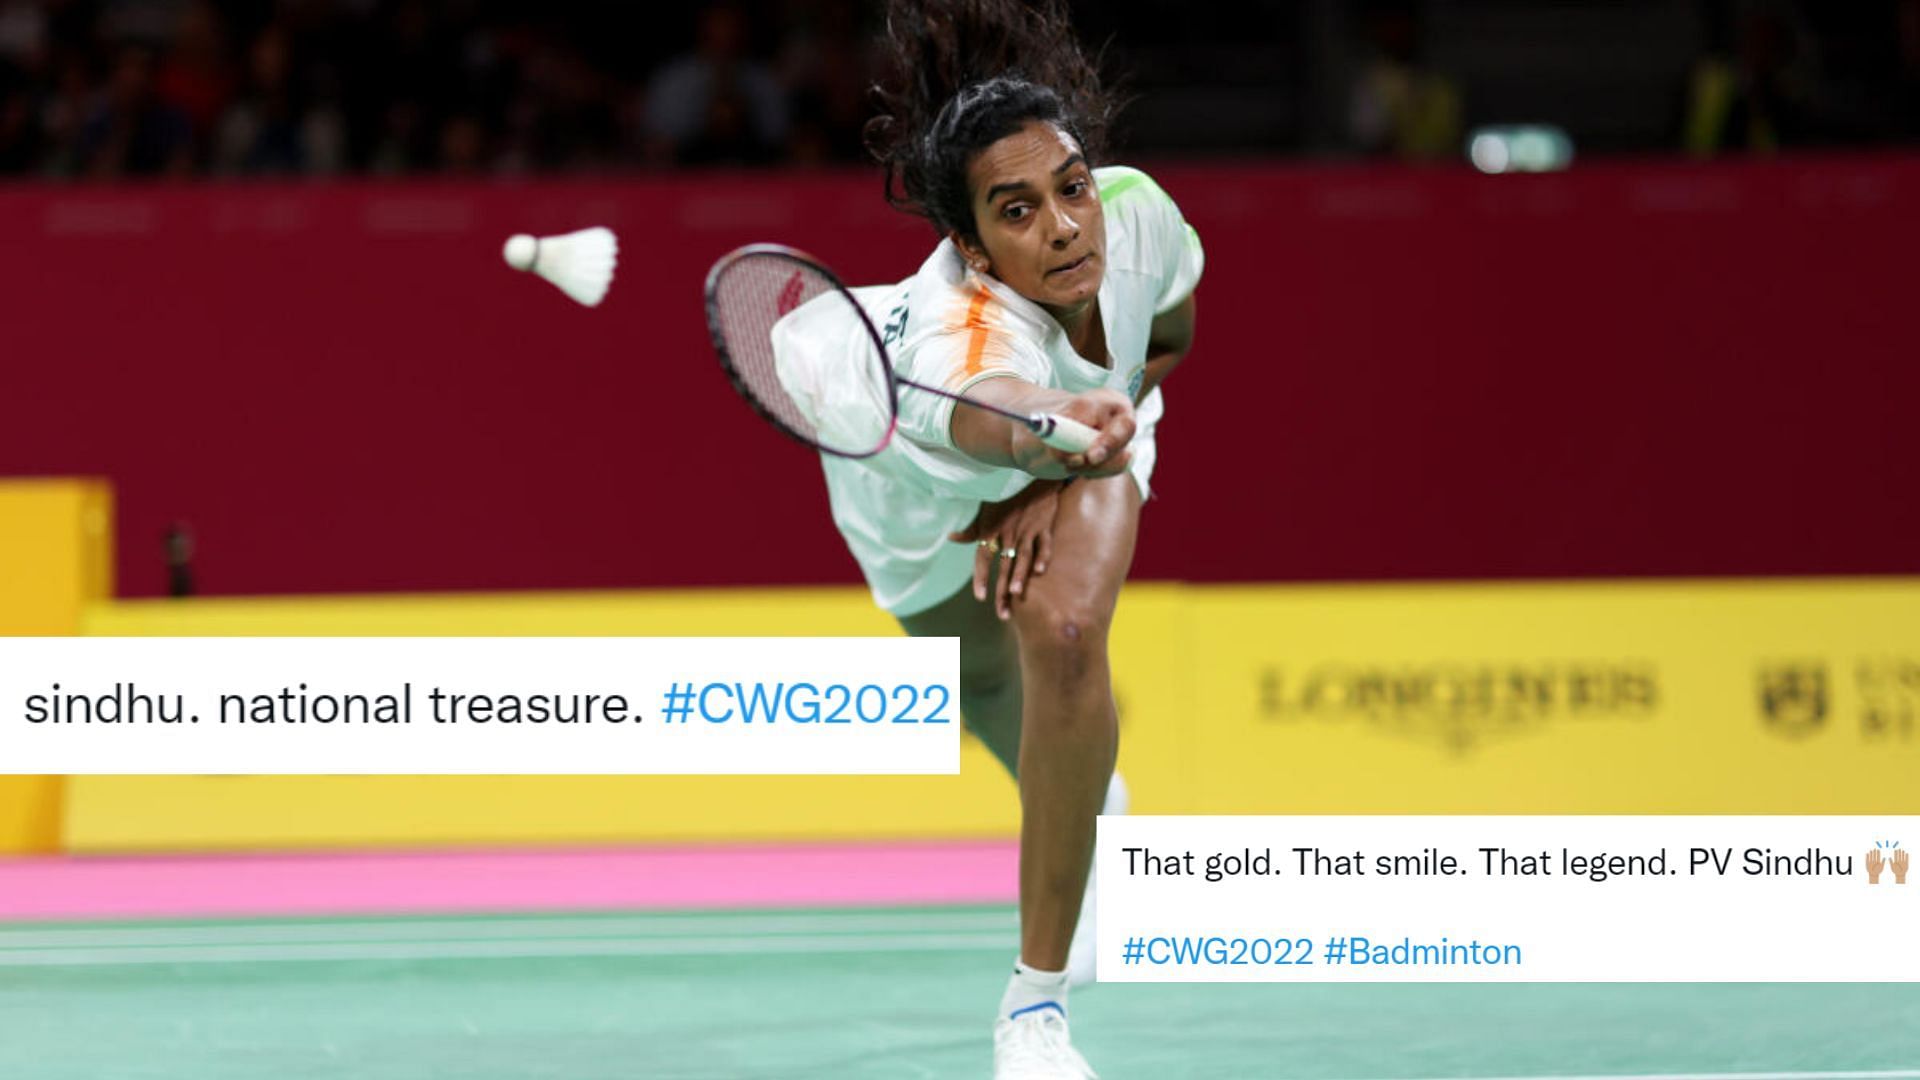 CWG 2022: Women&#039;s Singles gold medalist PV Sindhu